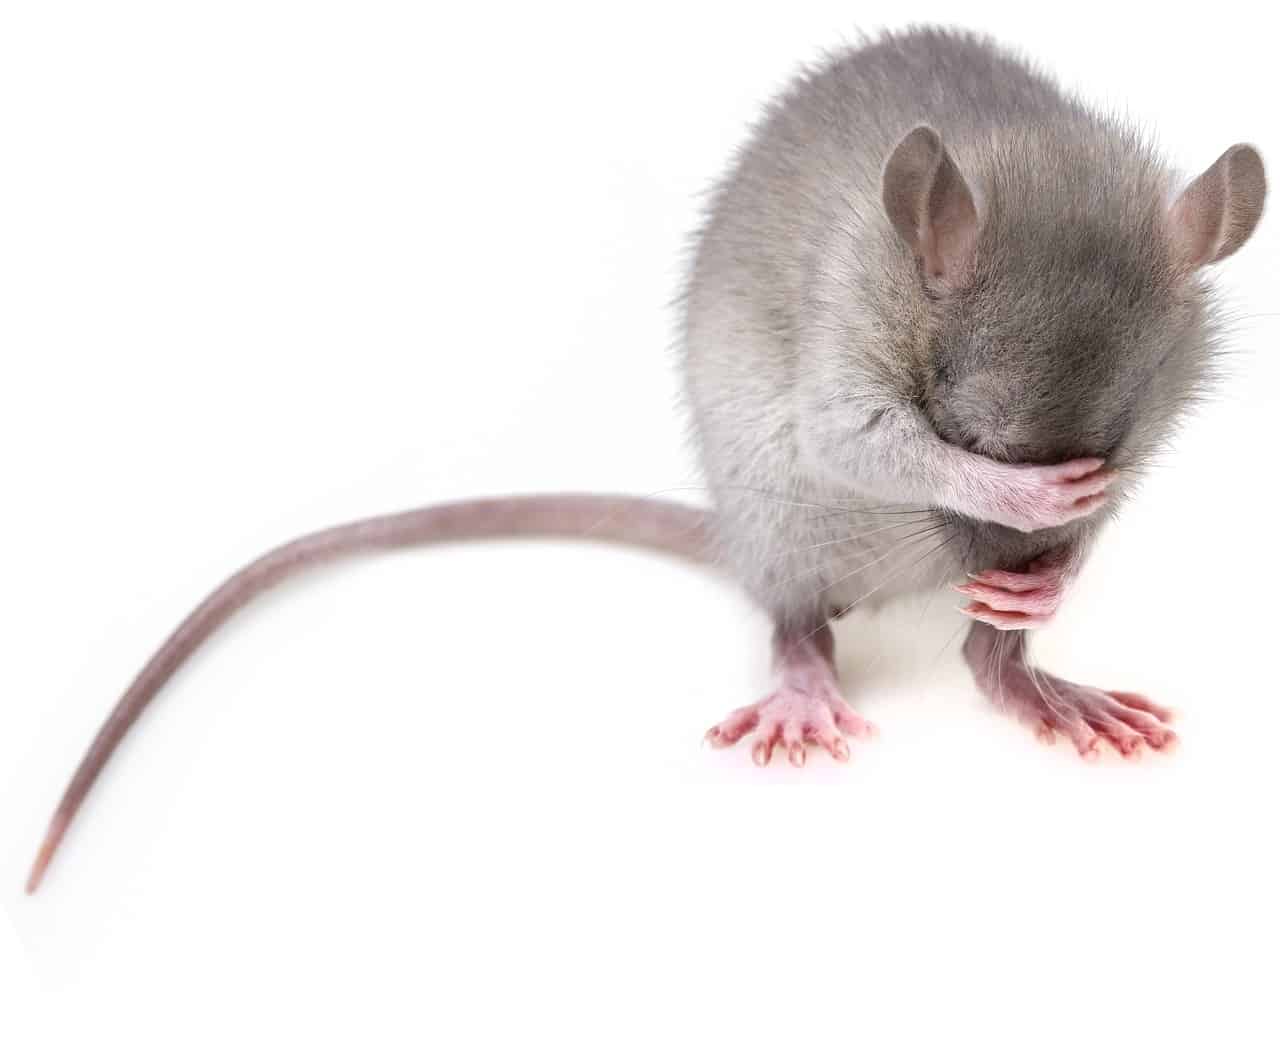 Are Pet Mice Good Pets